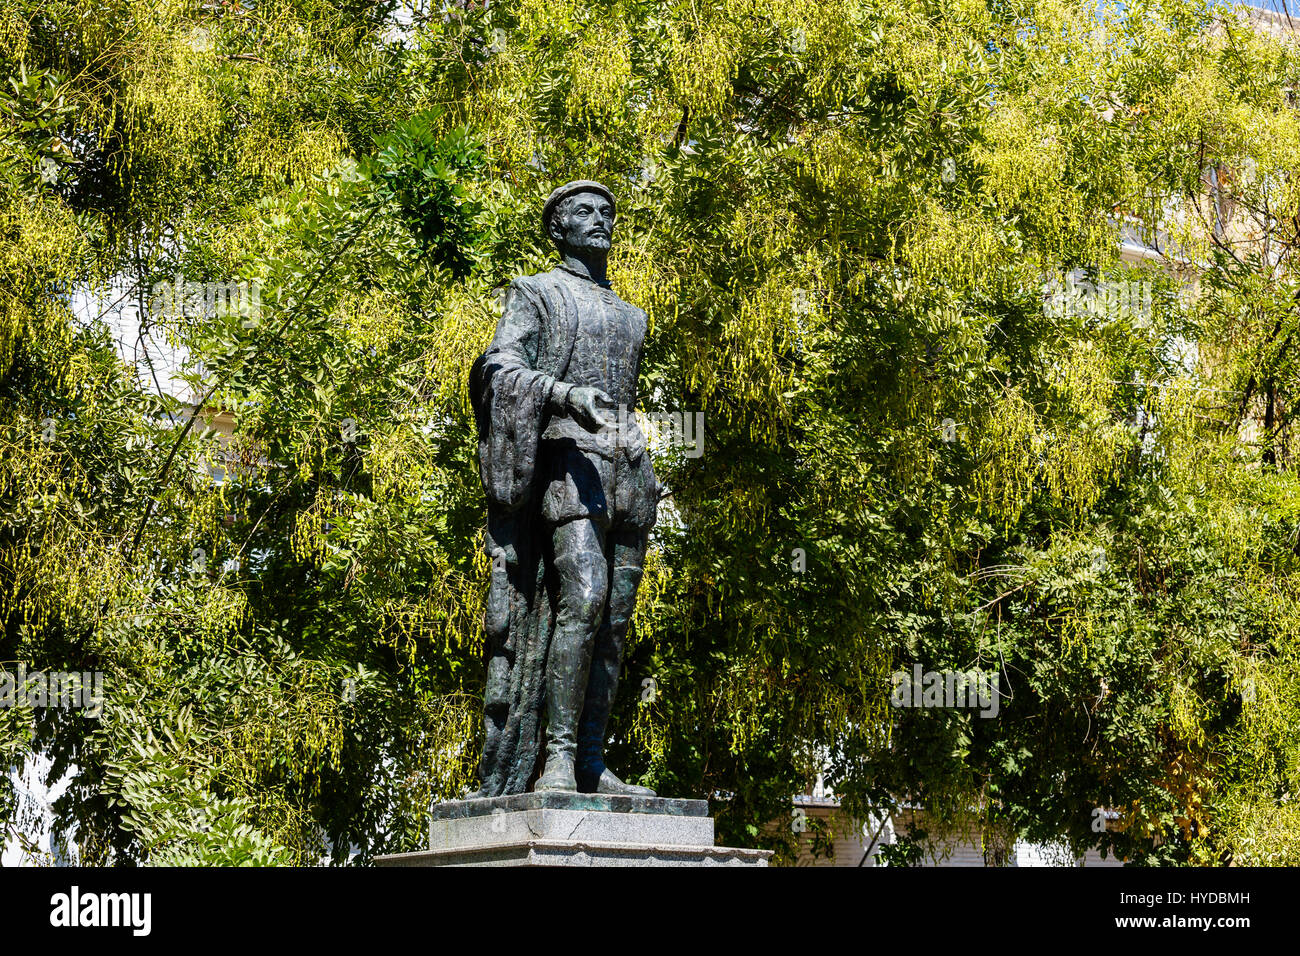 Sevilla, SPAIN - September 10, 2015: statue of Don Juan Tenorio on the Sevilla street, public place Stock Photo